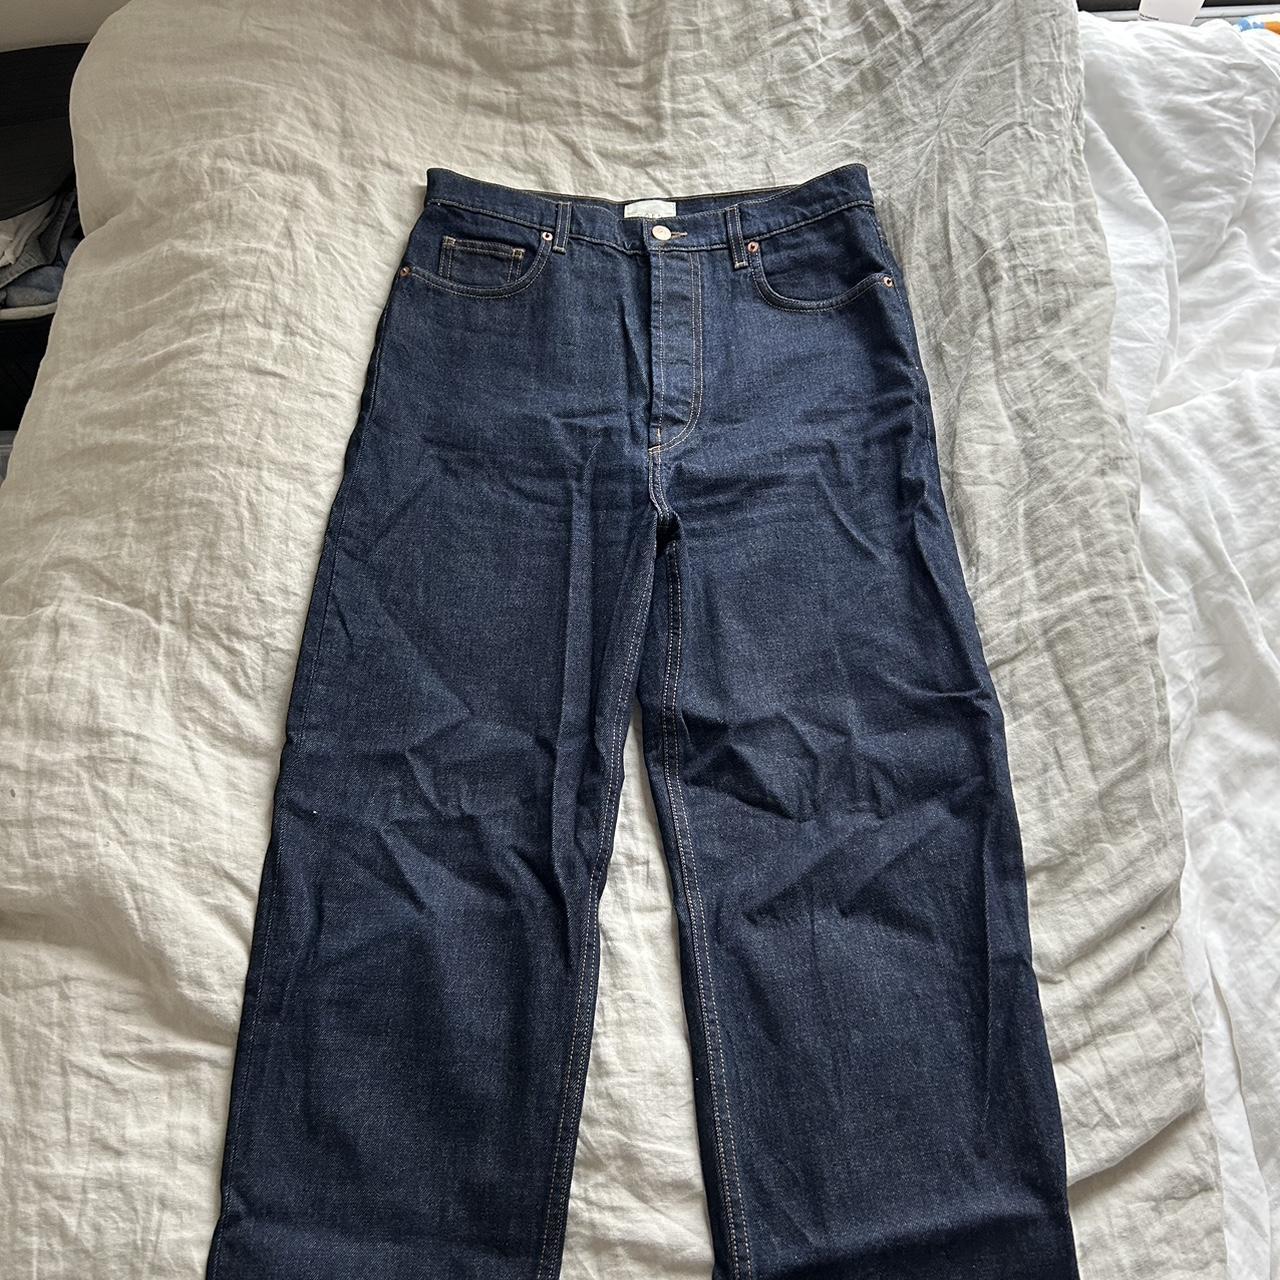 DÔEN straight leg tapered jeans in dark wash Size 30 - Depop